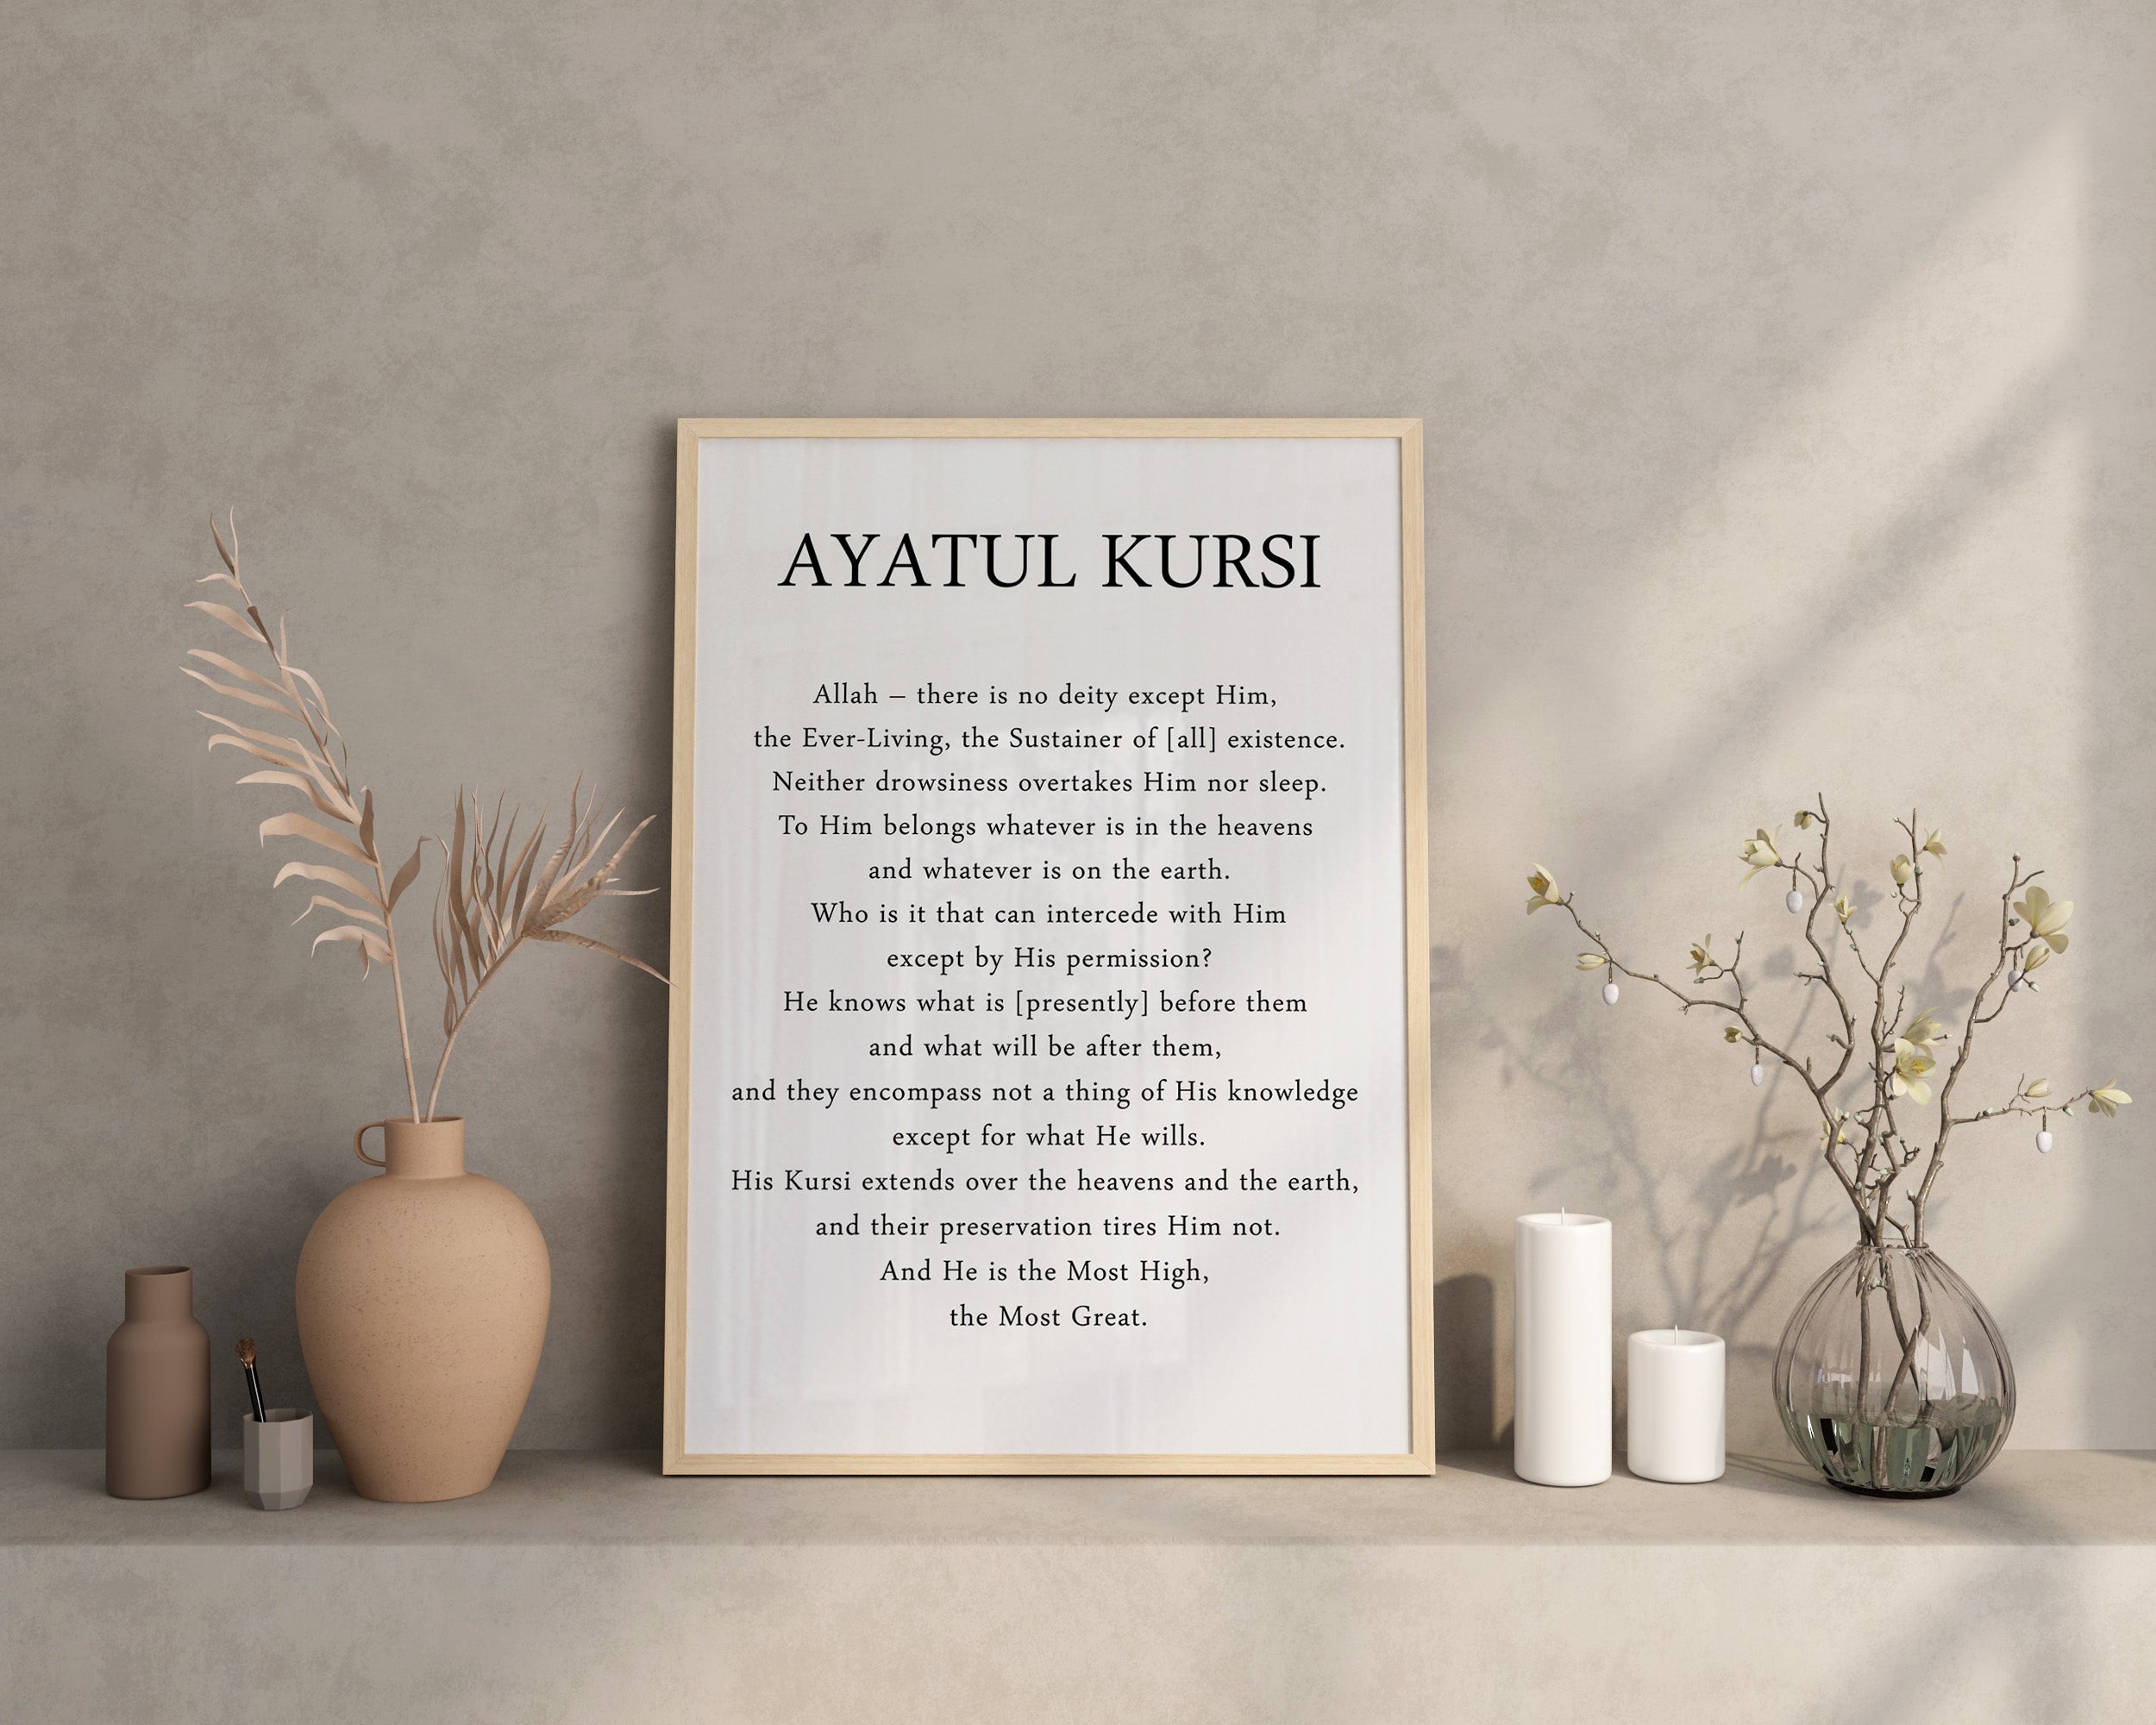 Ayatul Kursi in English Translation | Islamic Wall Art Print - Peaceful Arts UK